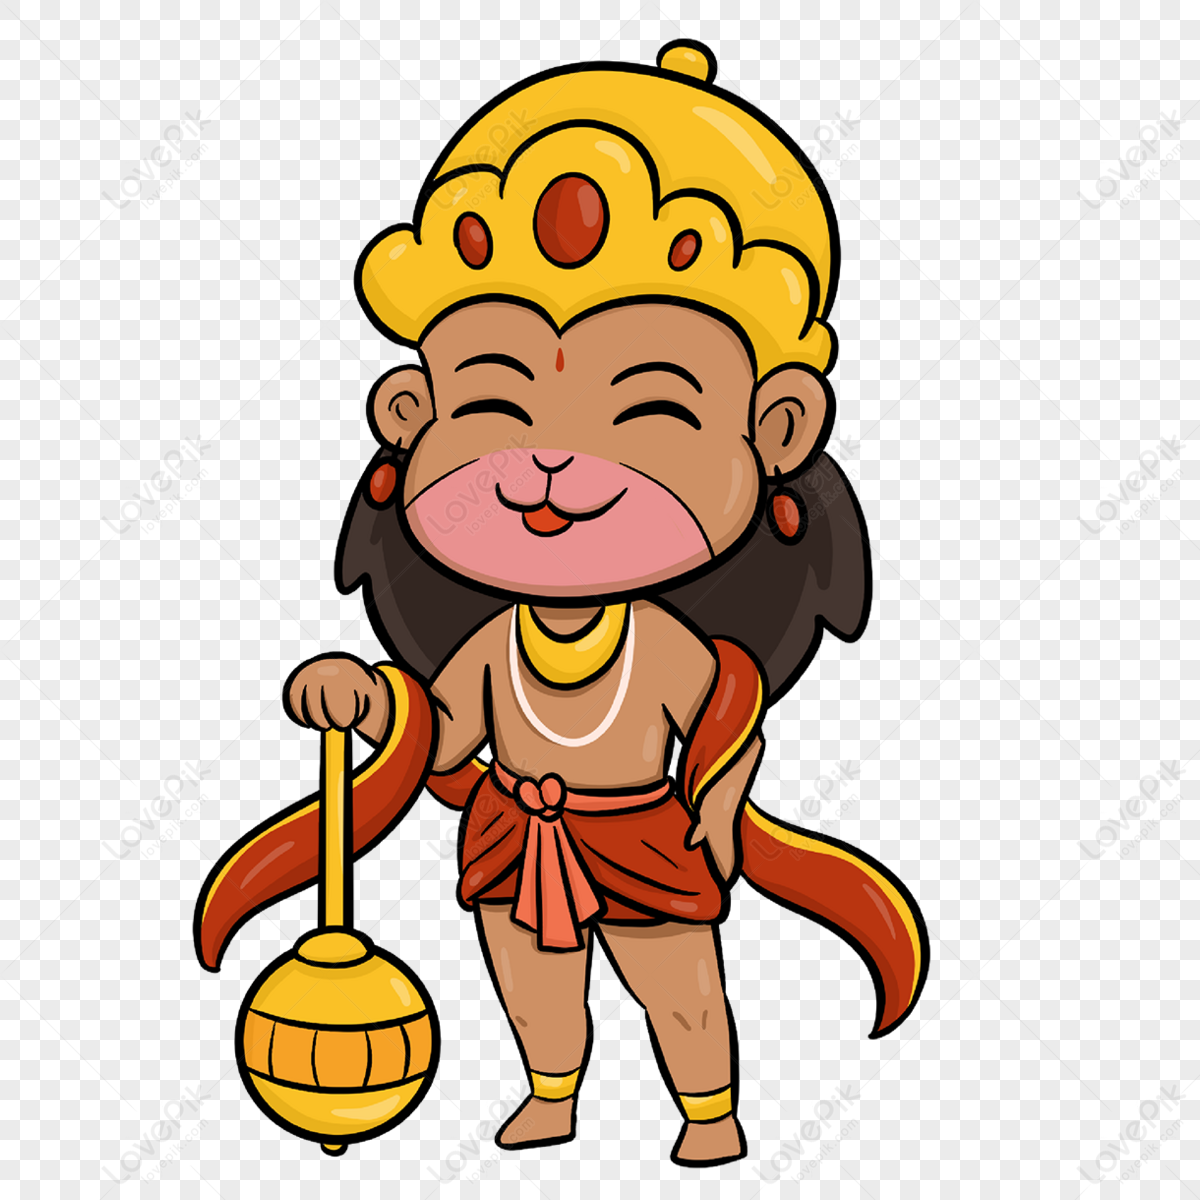 Lord Hanuman PNG Transparent Images Free Download | Vector Files | Pngtree